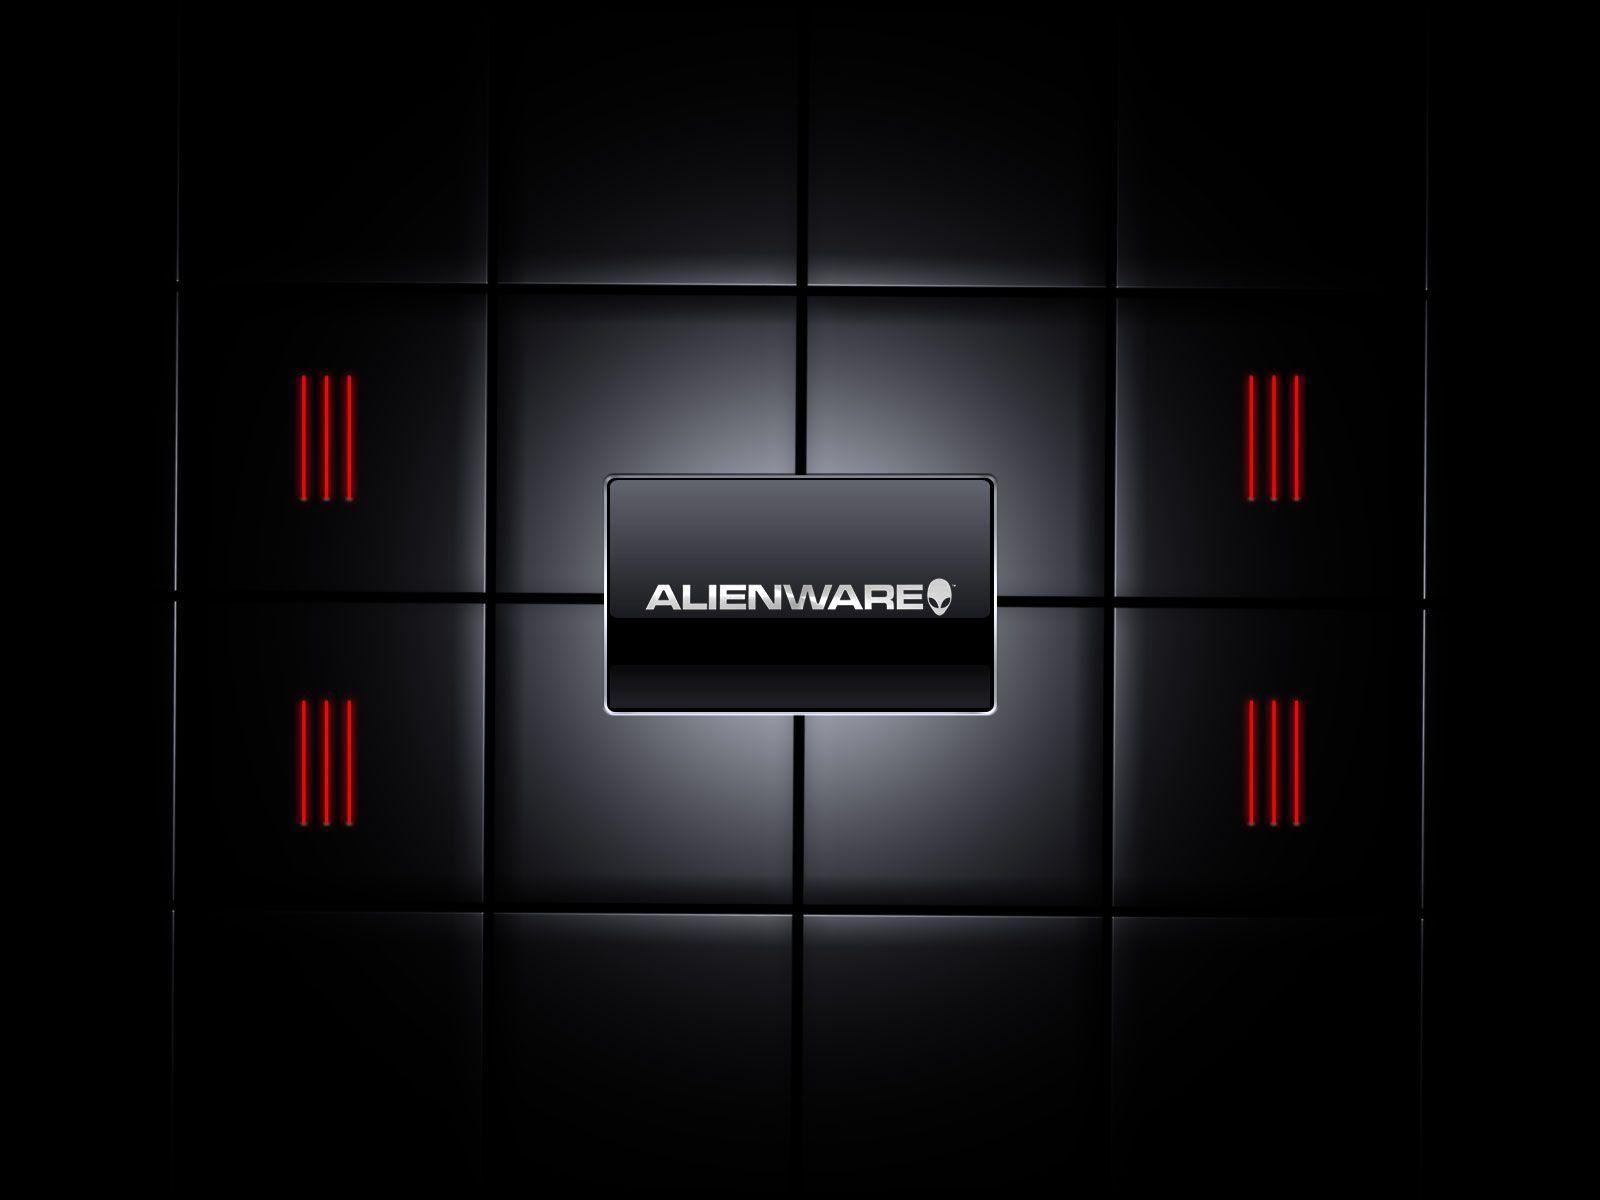 Alienware Darkstar Theme Wallpaper. PicsWallpaper